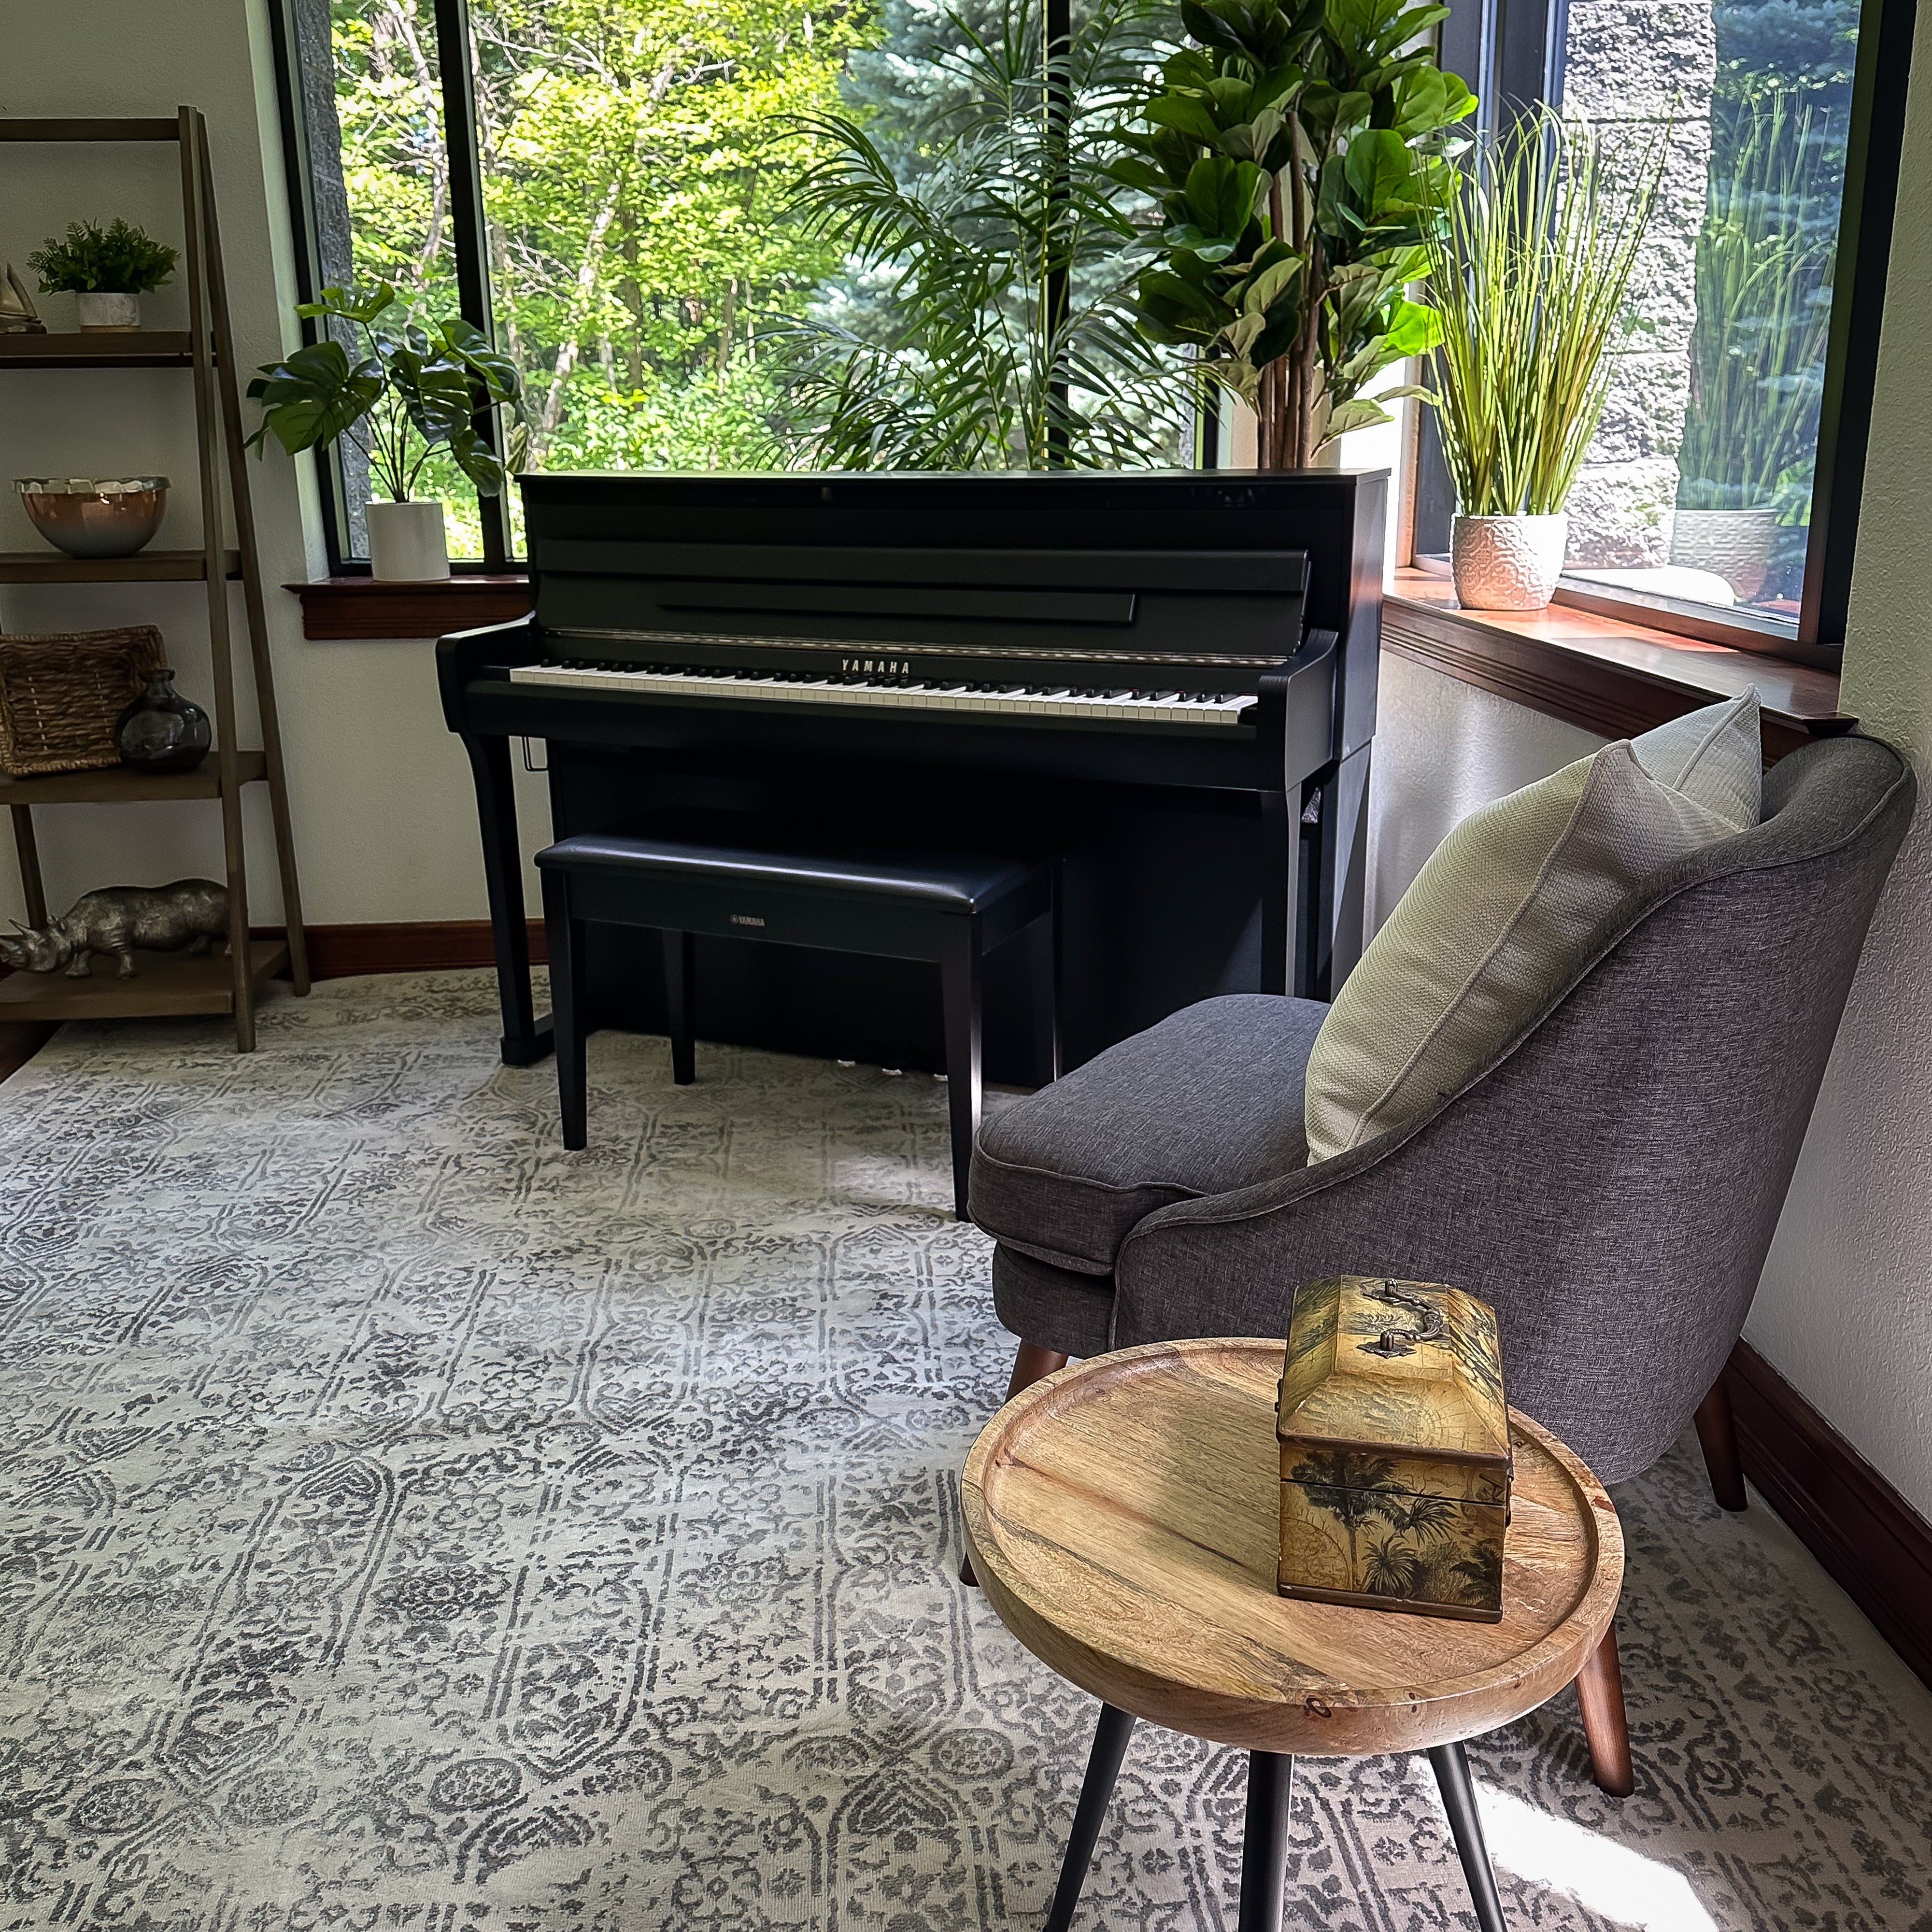 Yamaha Clavinova CLP-885 Digital Piano - Matte Black in a stylish room, view 1